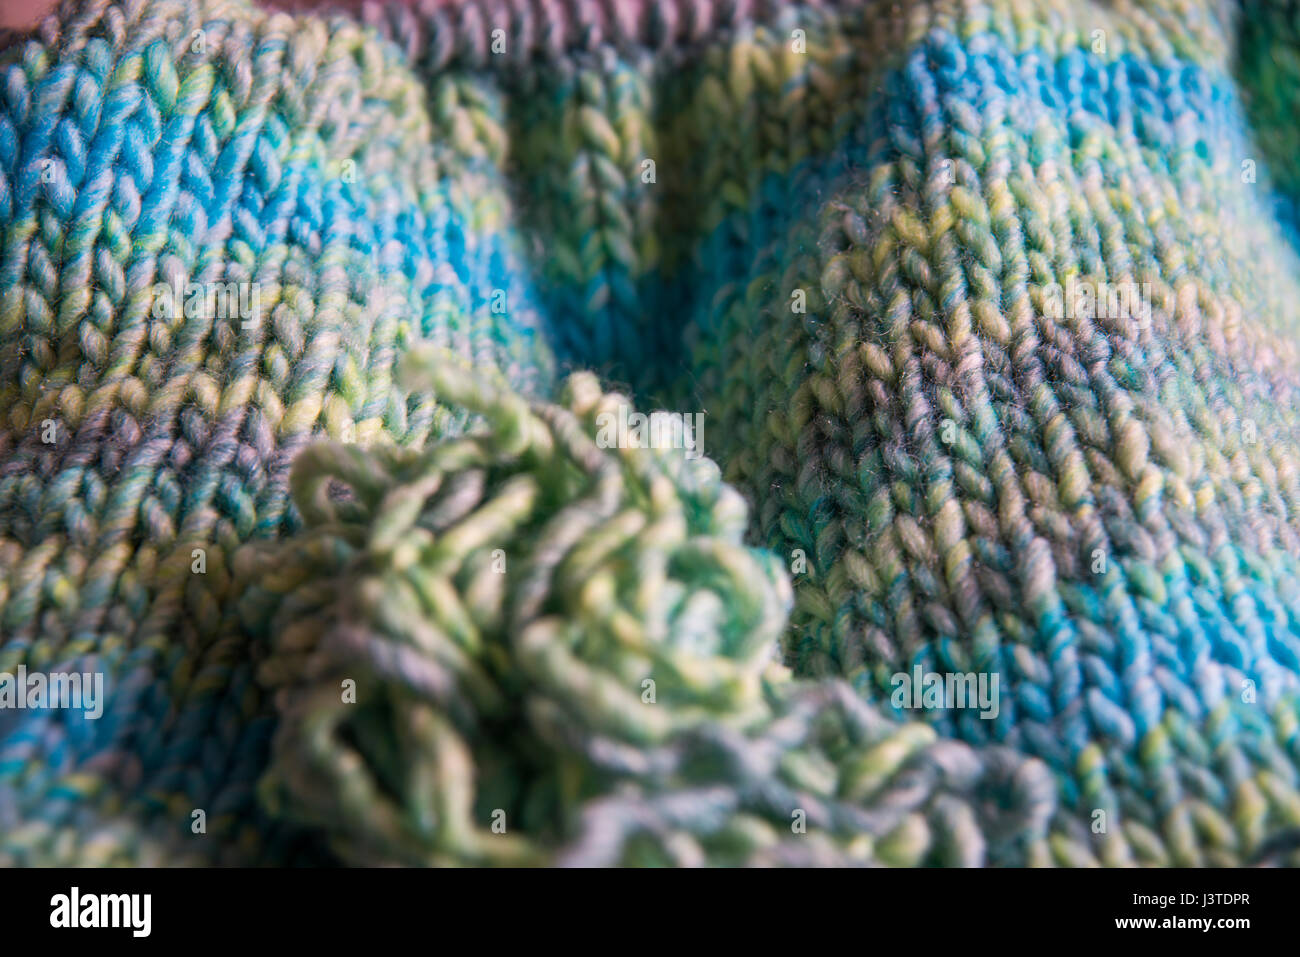 Knitting cloth. Close view. Stock Photo